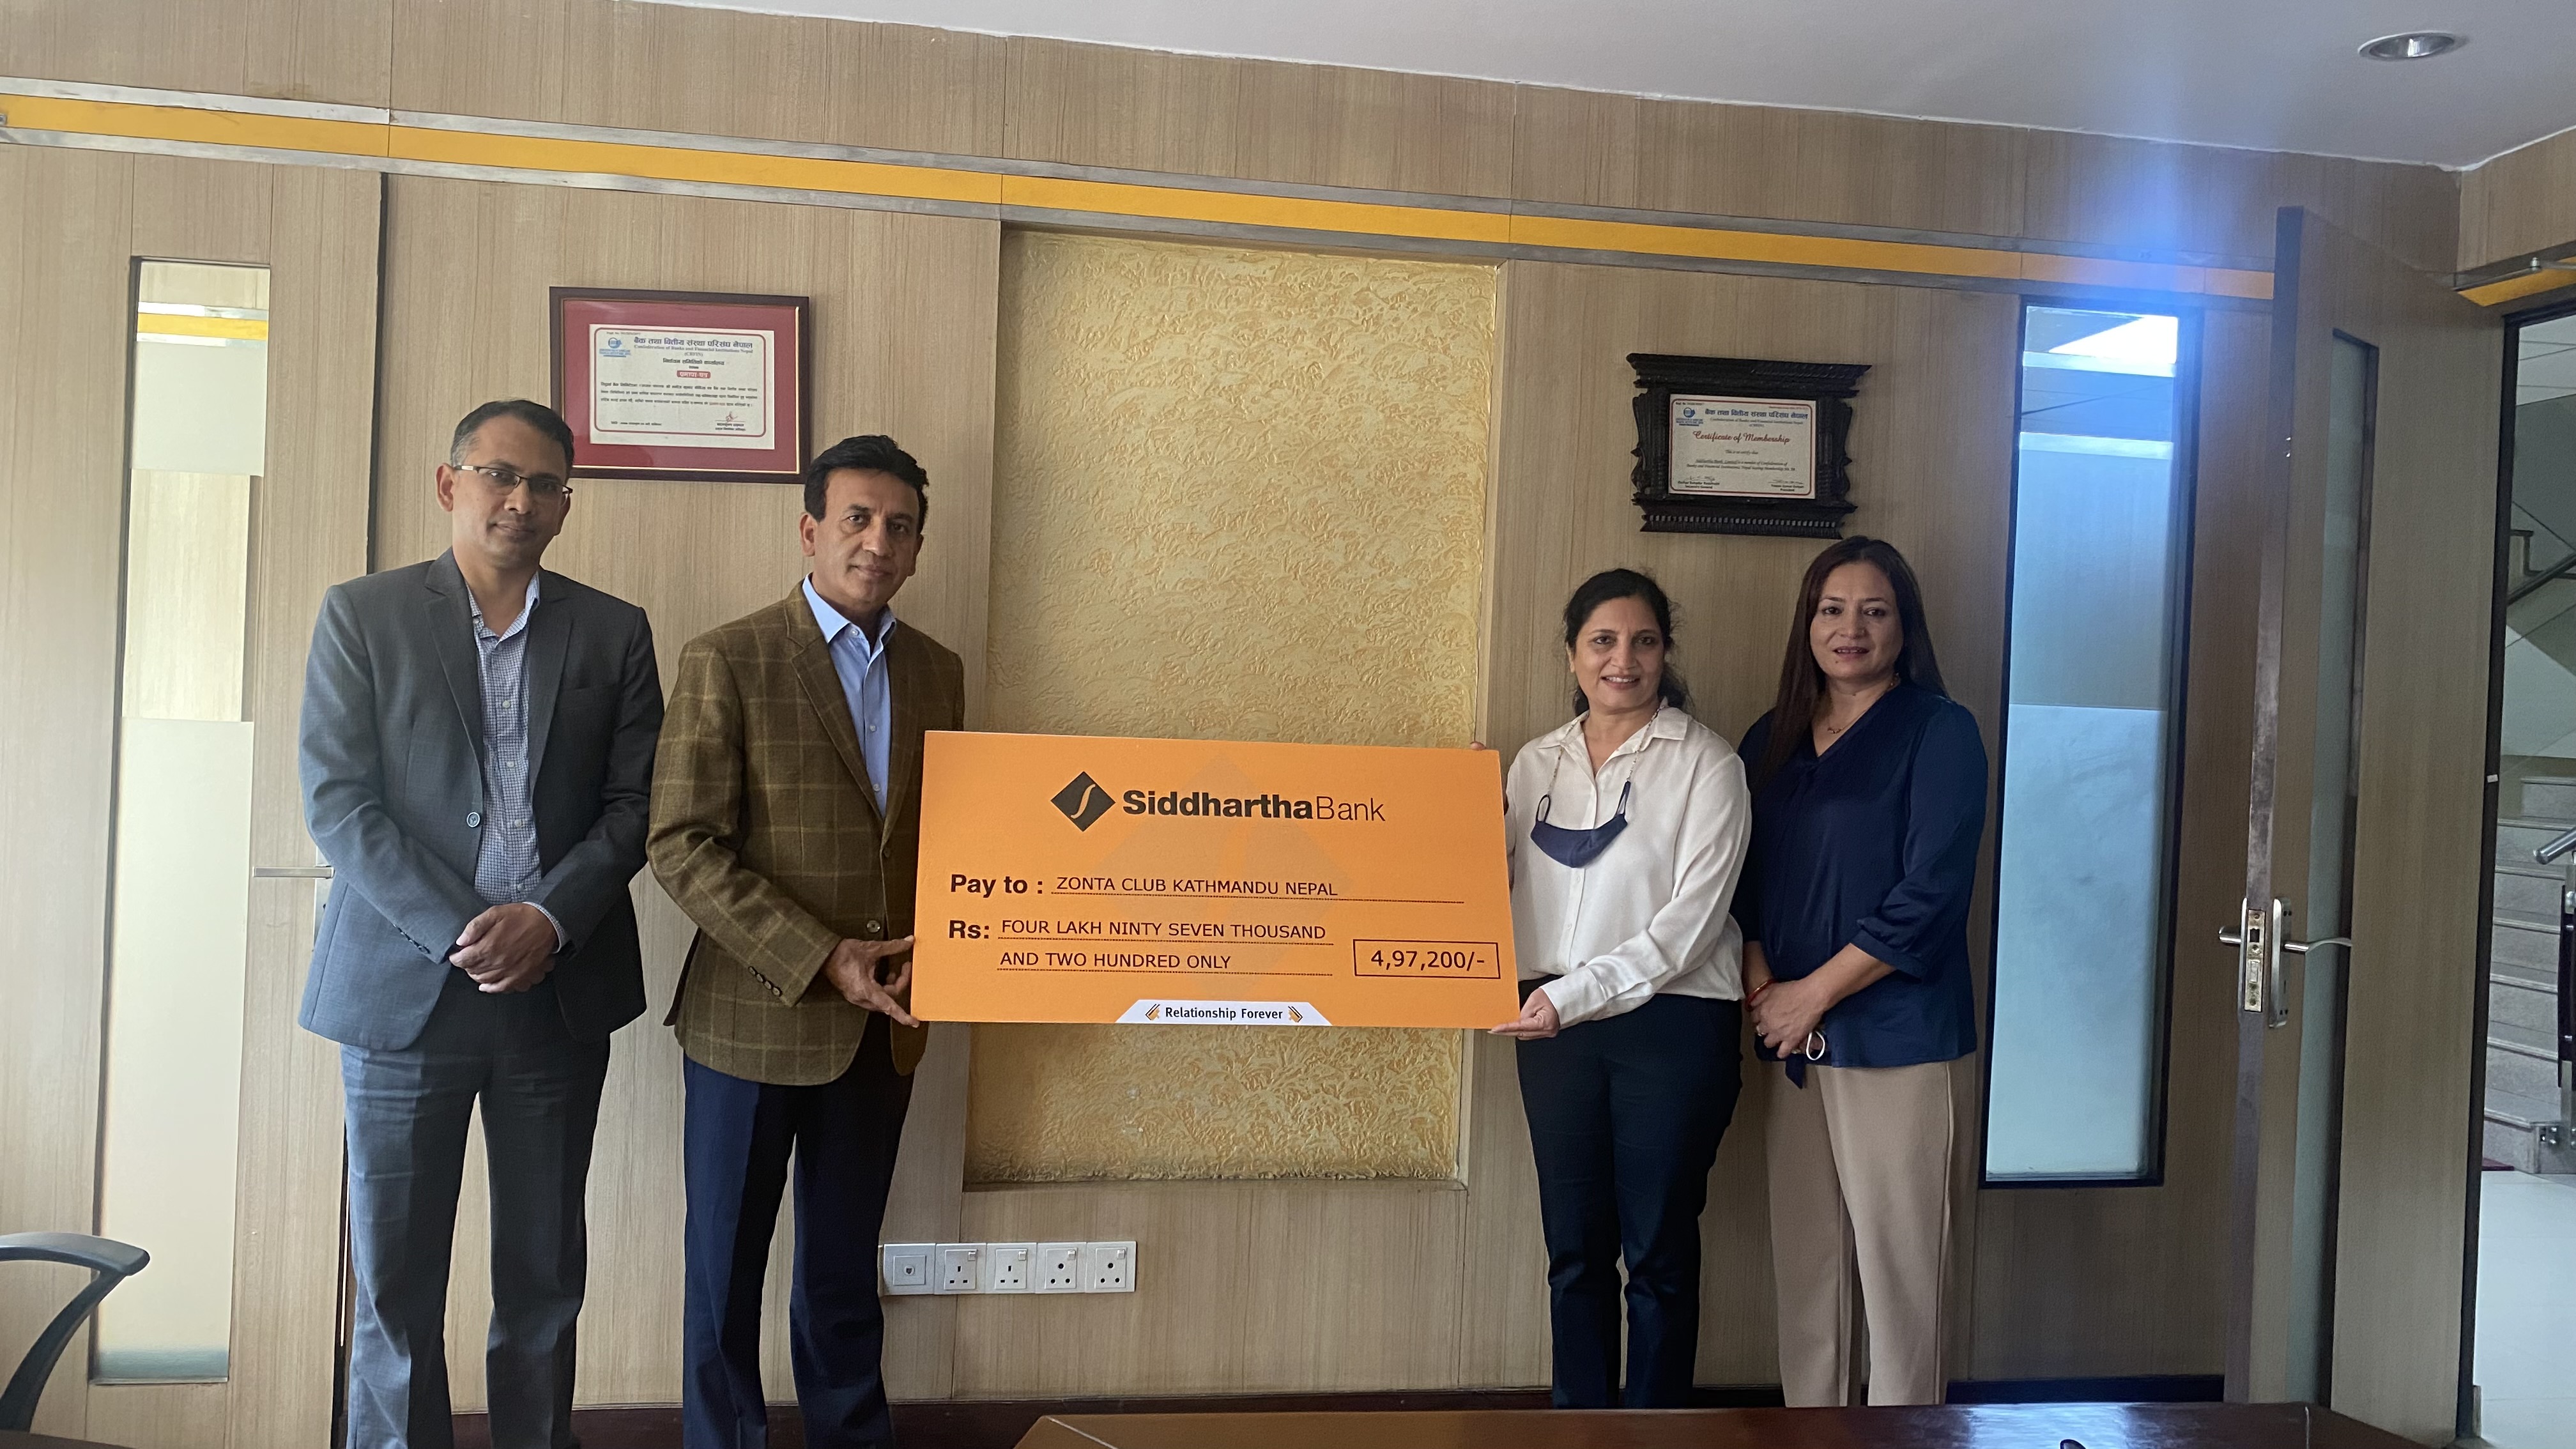 Financial Support to Zonta Club Kathmandu Nepal